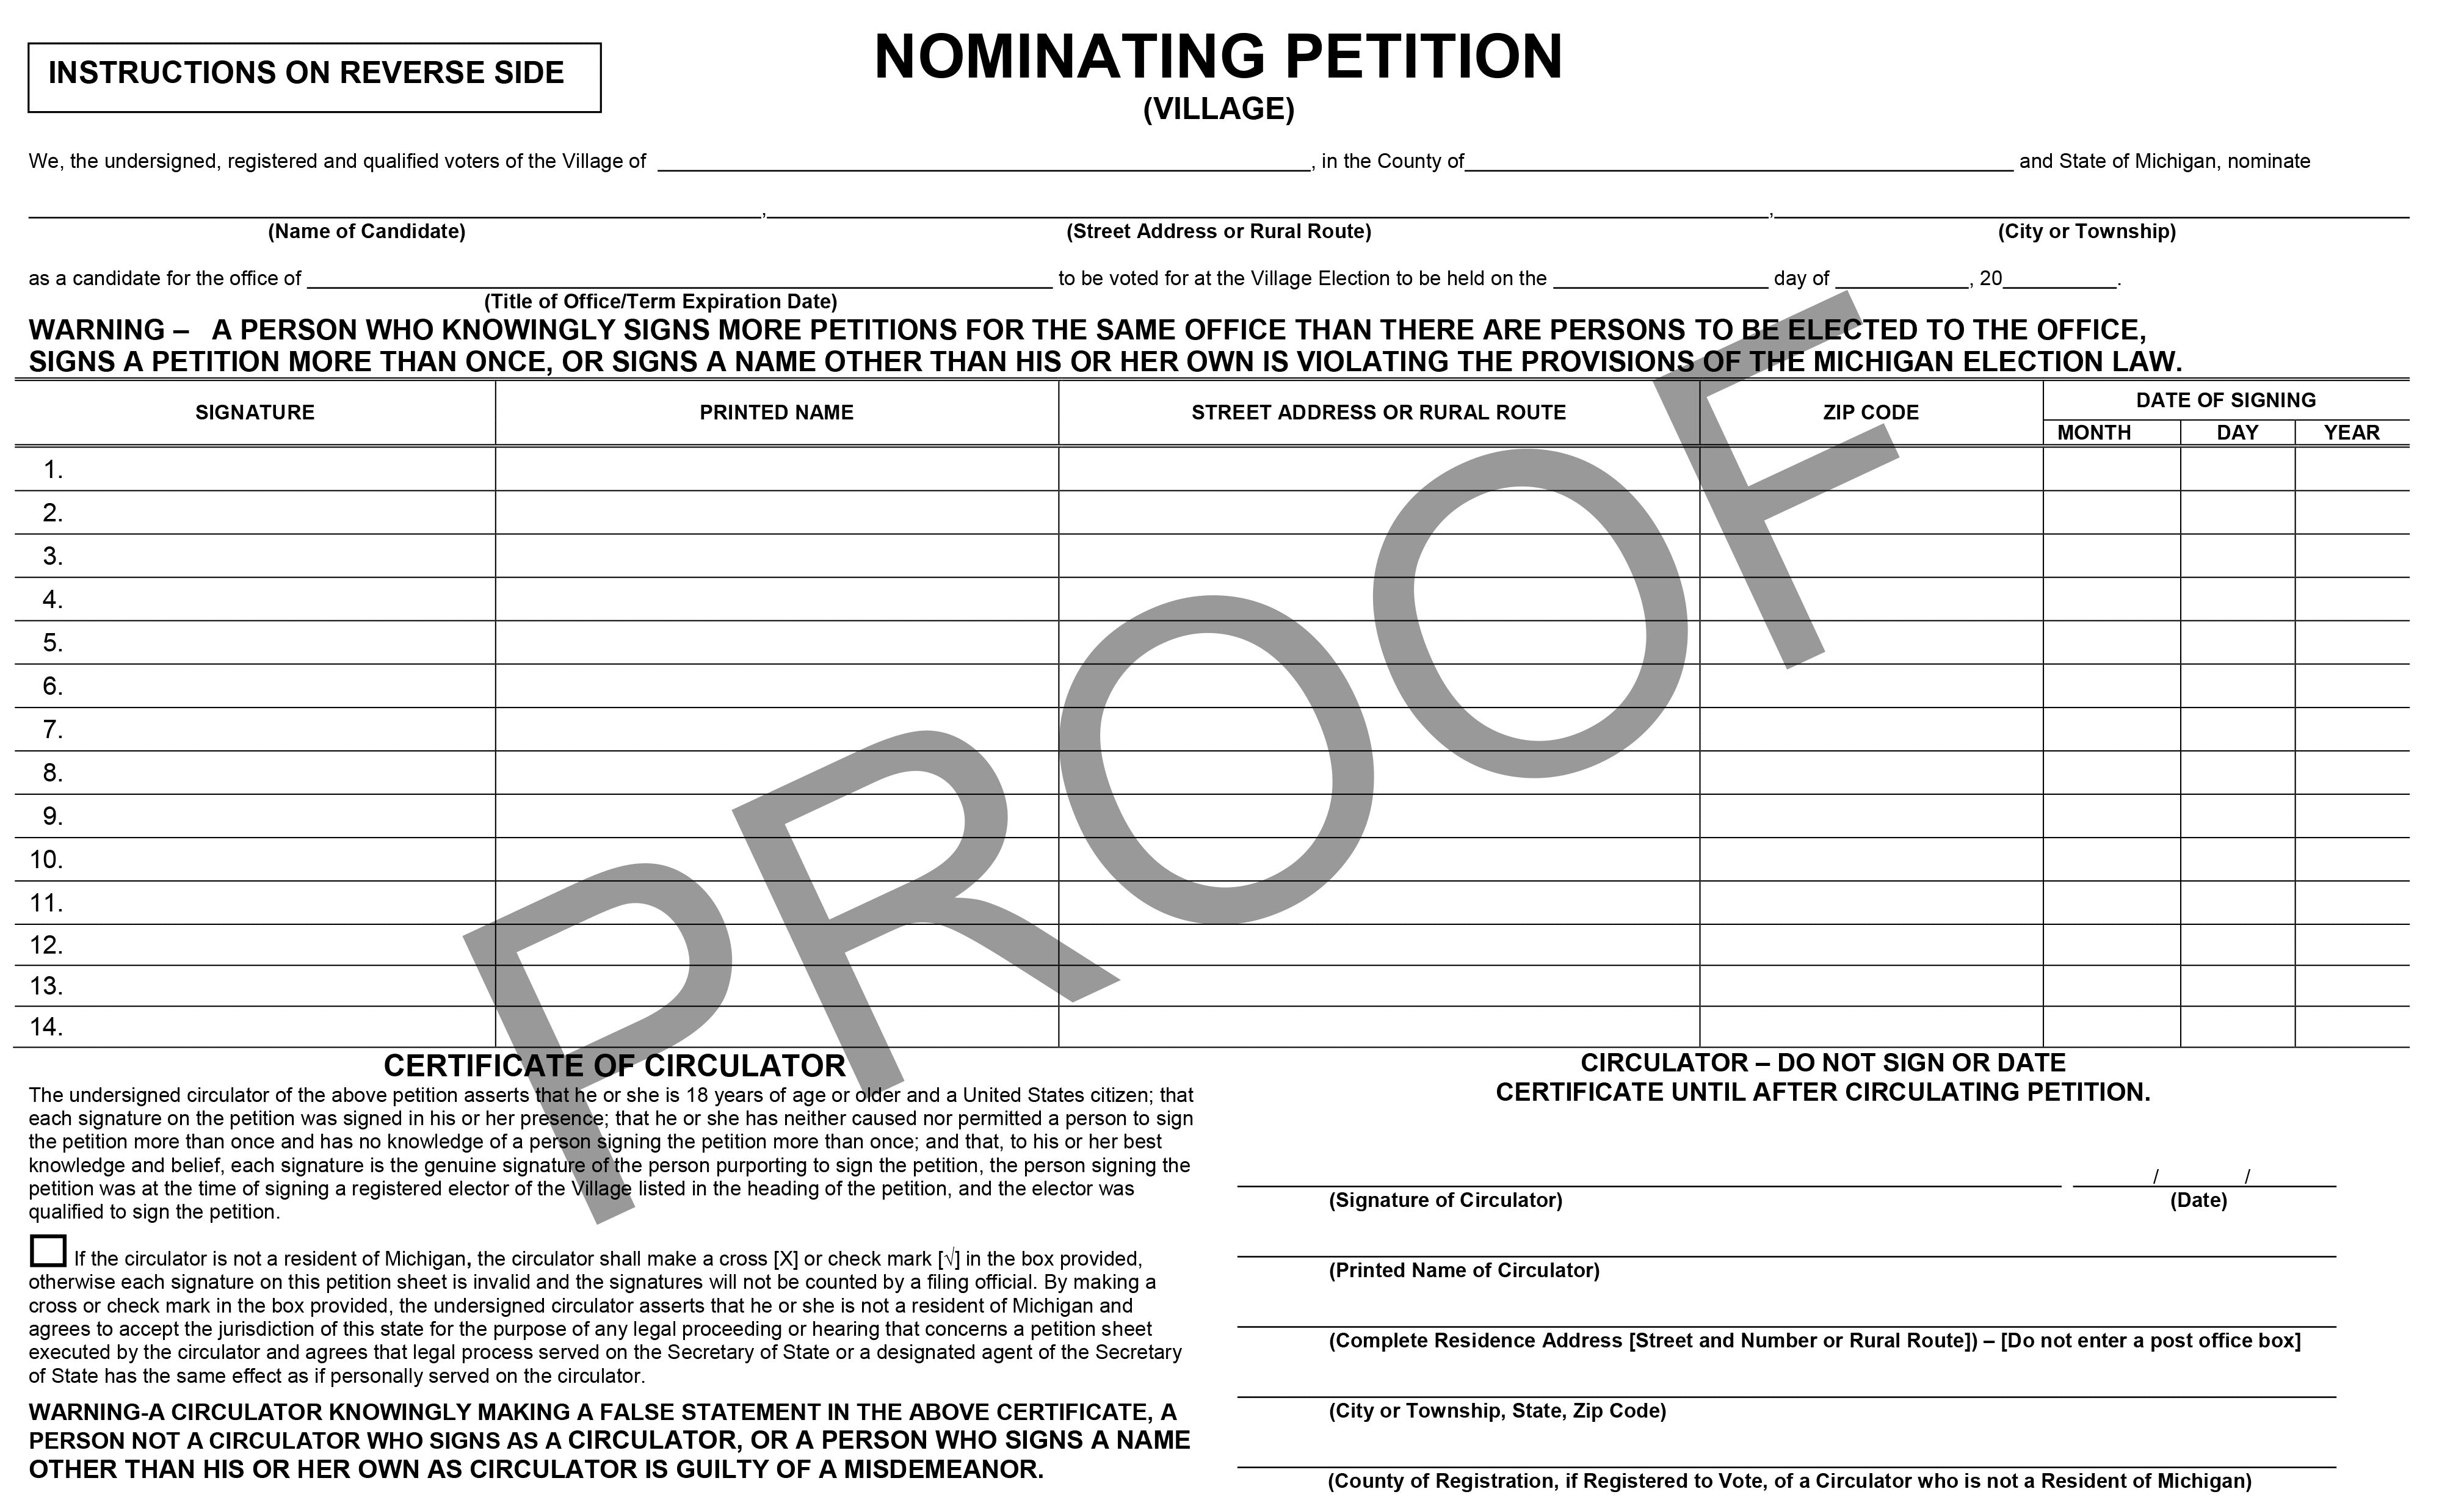 Nominating Petition (Village)